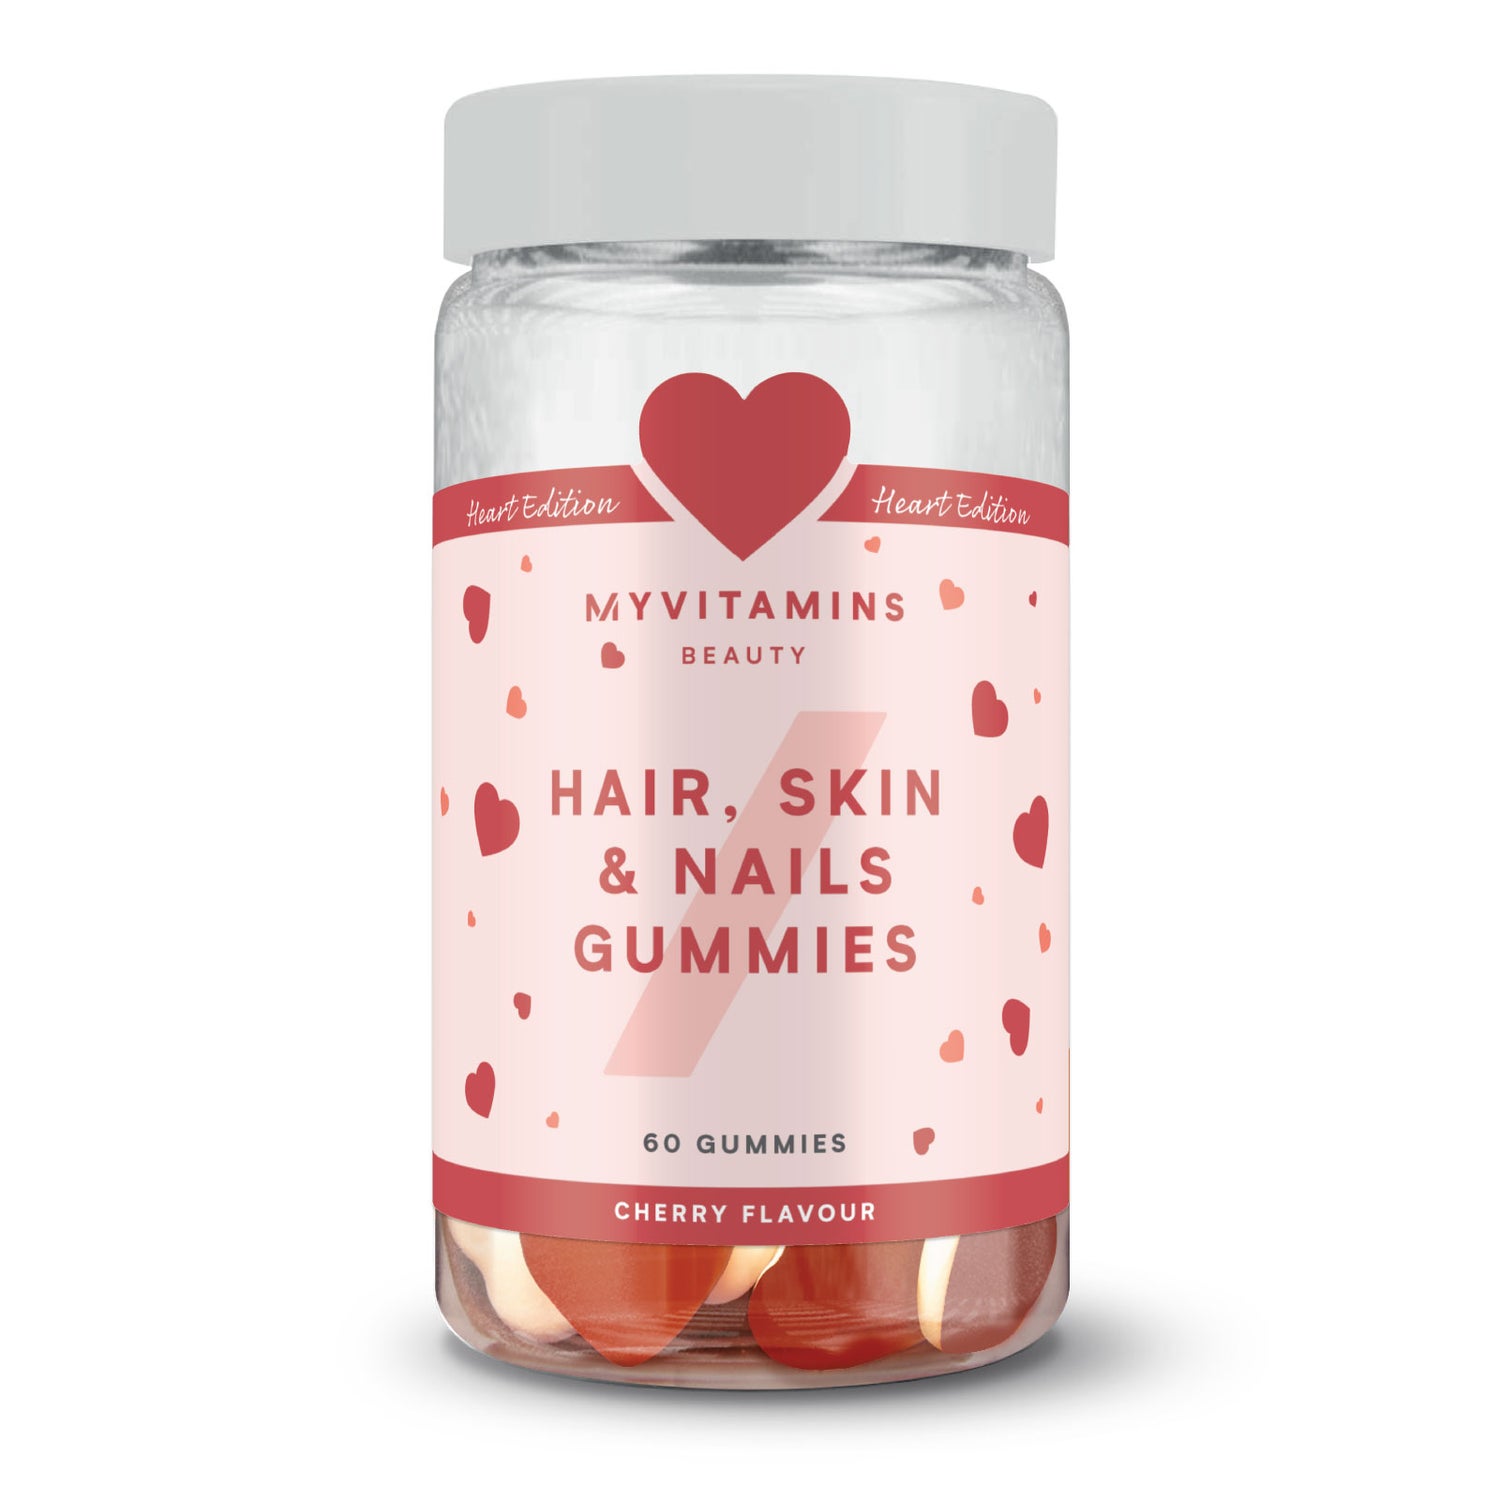 Hair, Skin & Nails Gummies - Double-Layered Heart Edition - 60gummies - Cherry